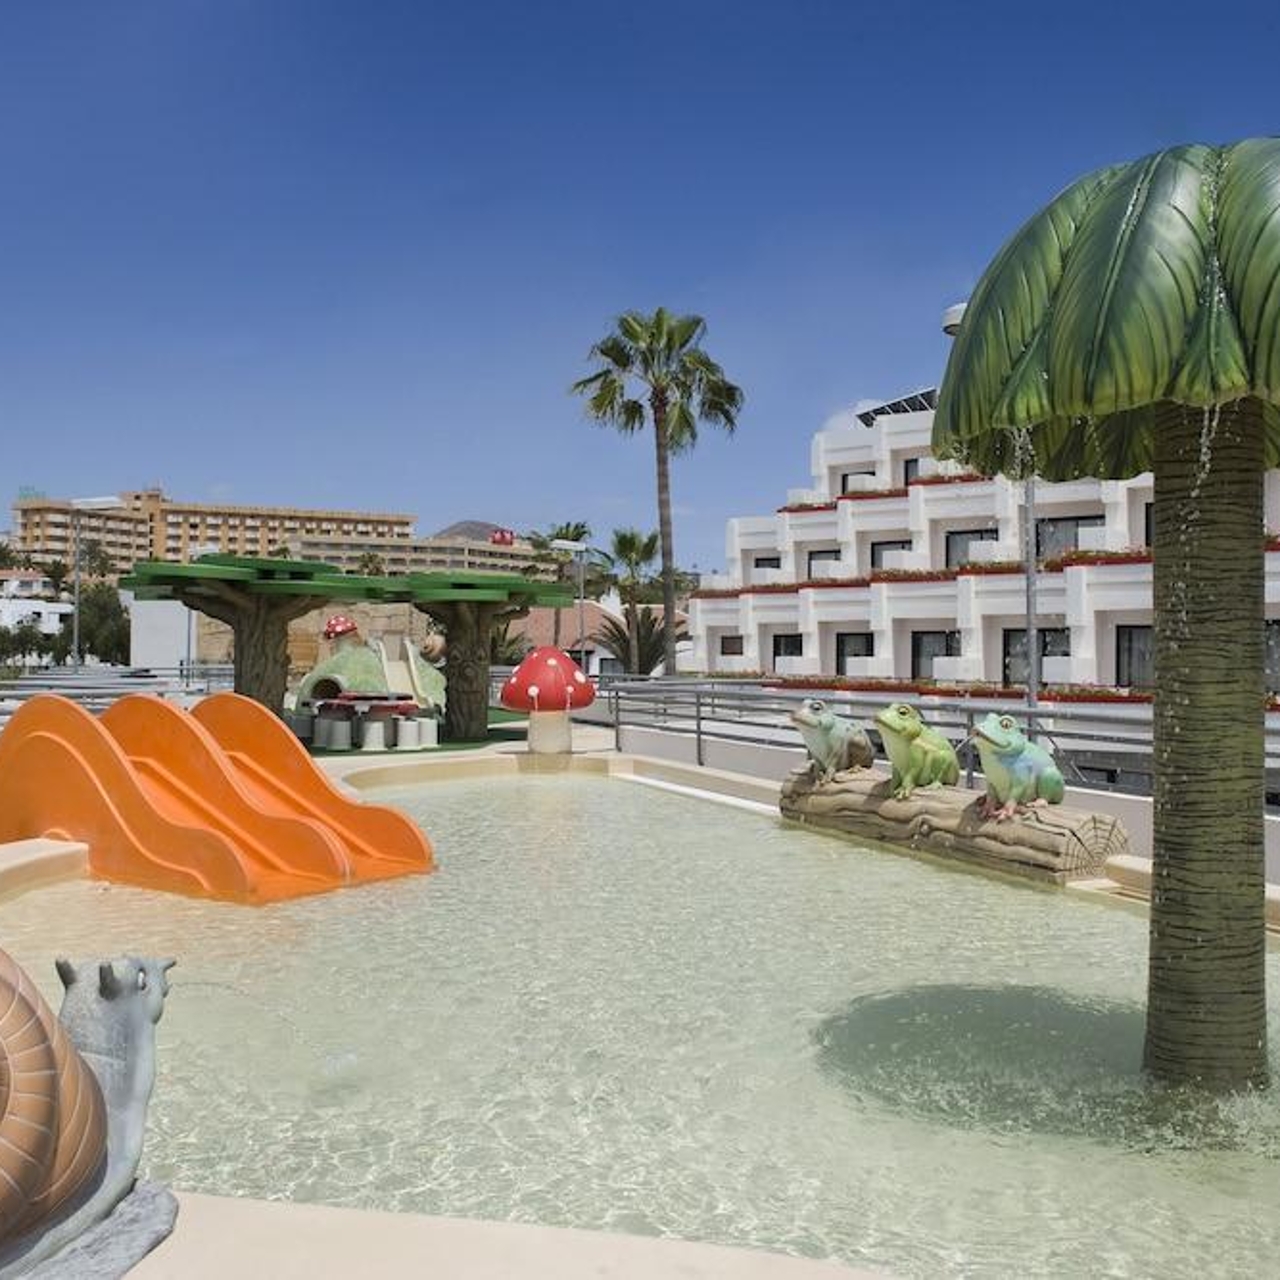 Hotel Gala Tenerife - 4 HRS star hotel in Playa de las Américas, Arona  (Canary Islands)